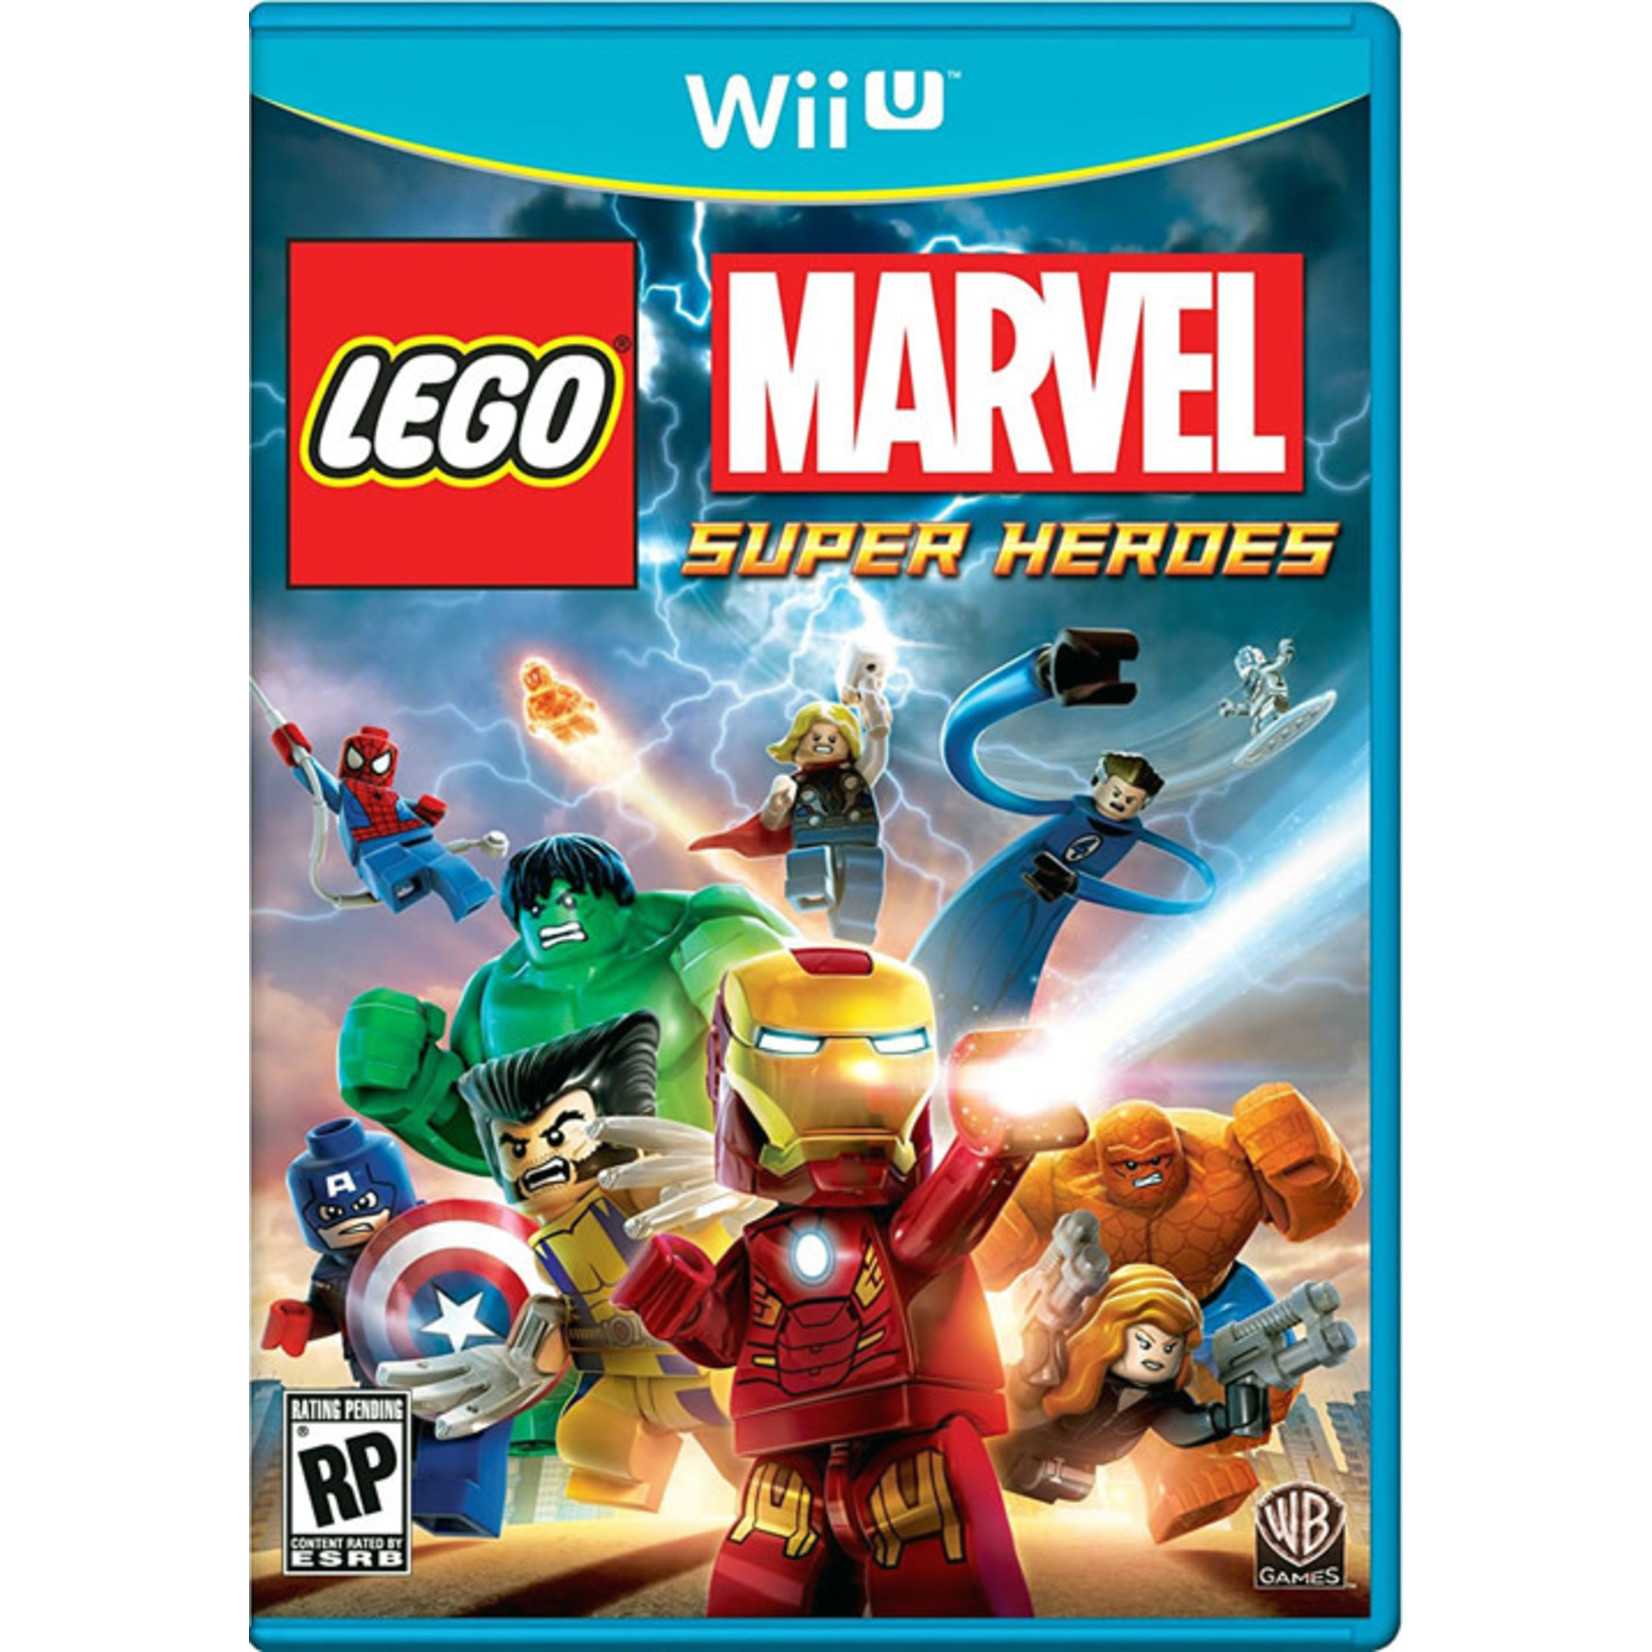 WIIUUSD-LEGO MARVEL SUPER HEROES